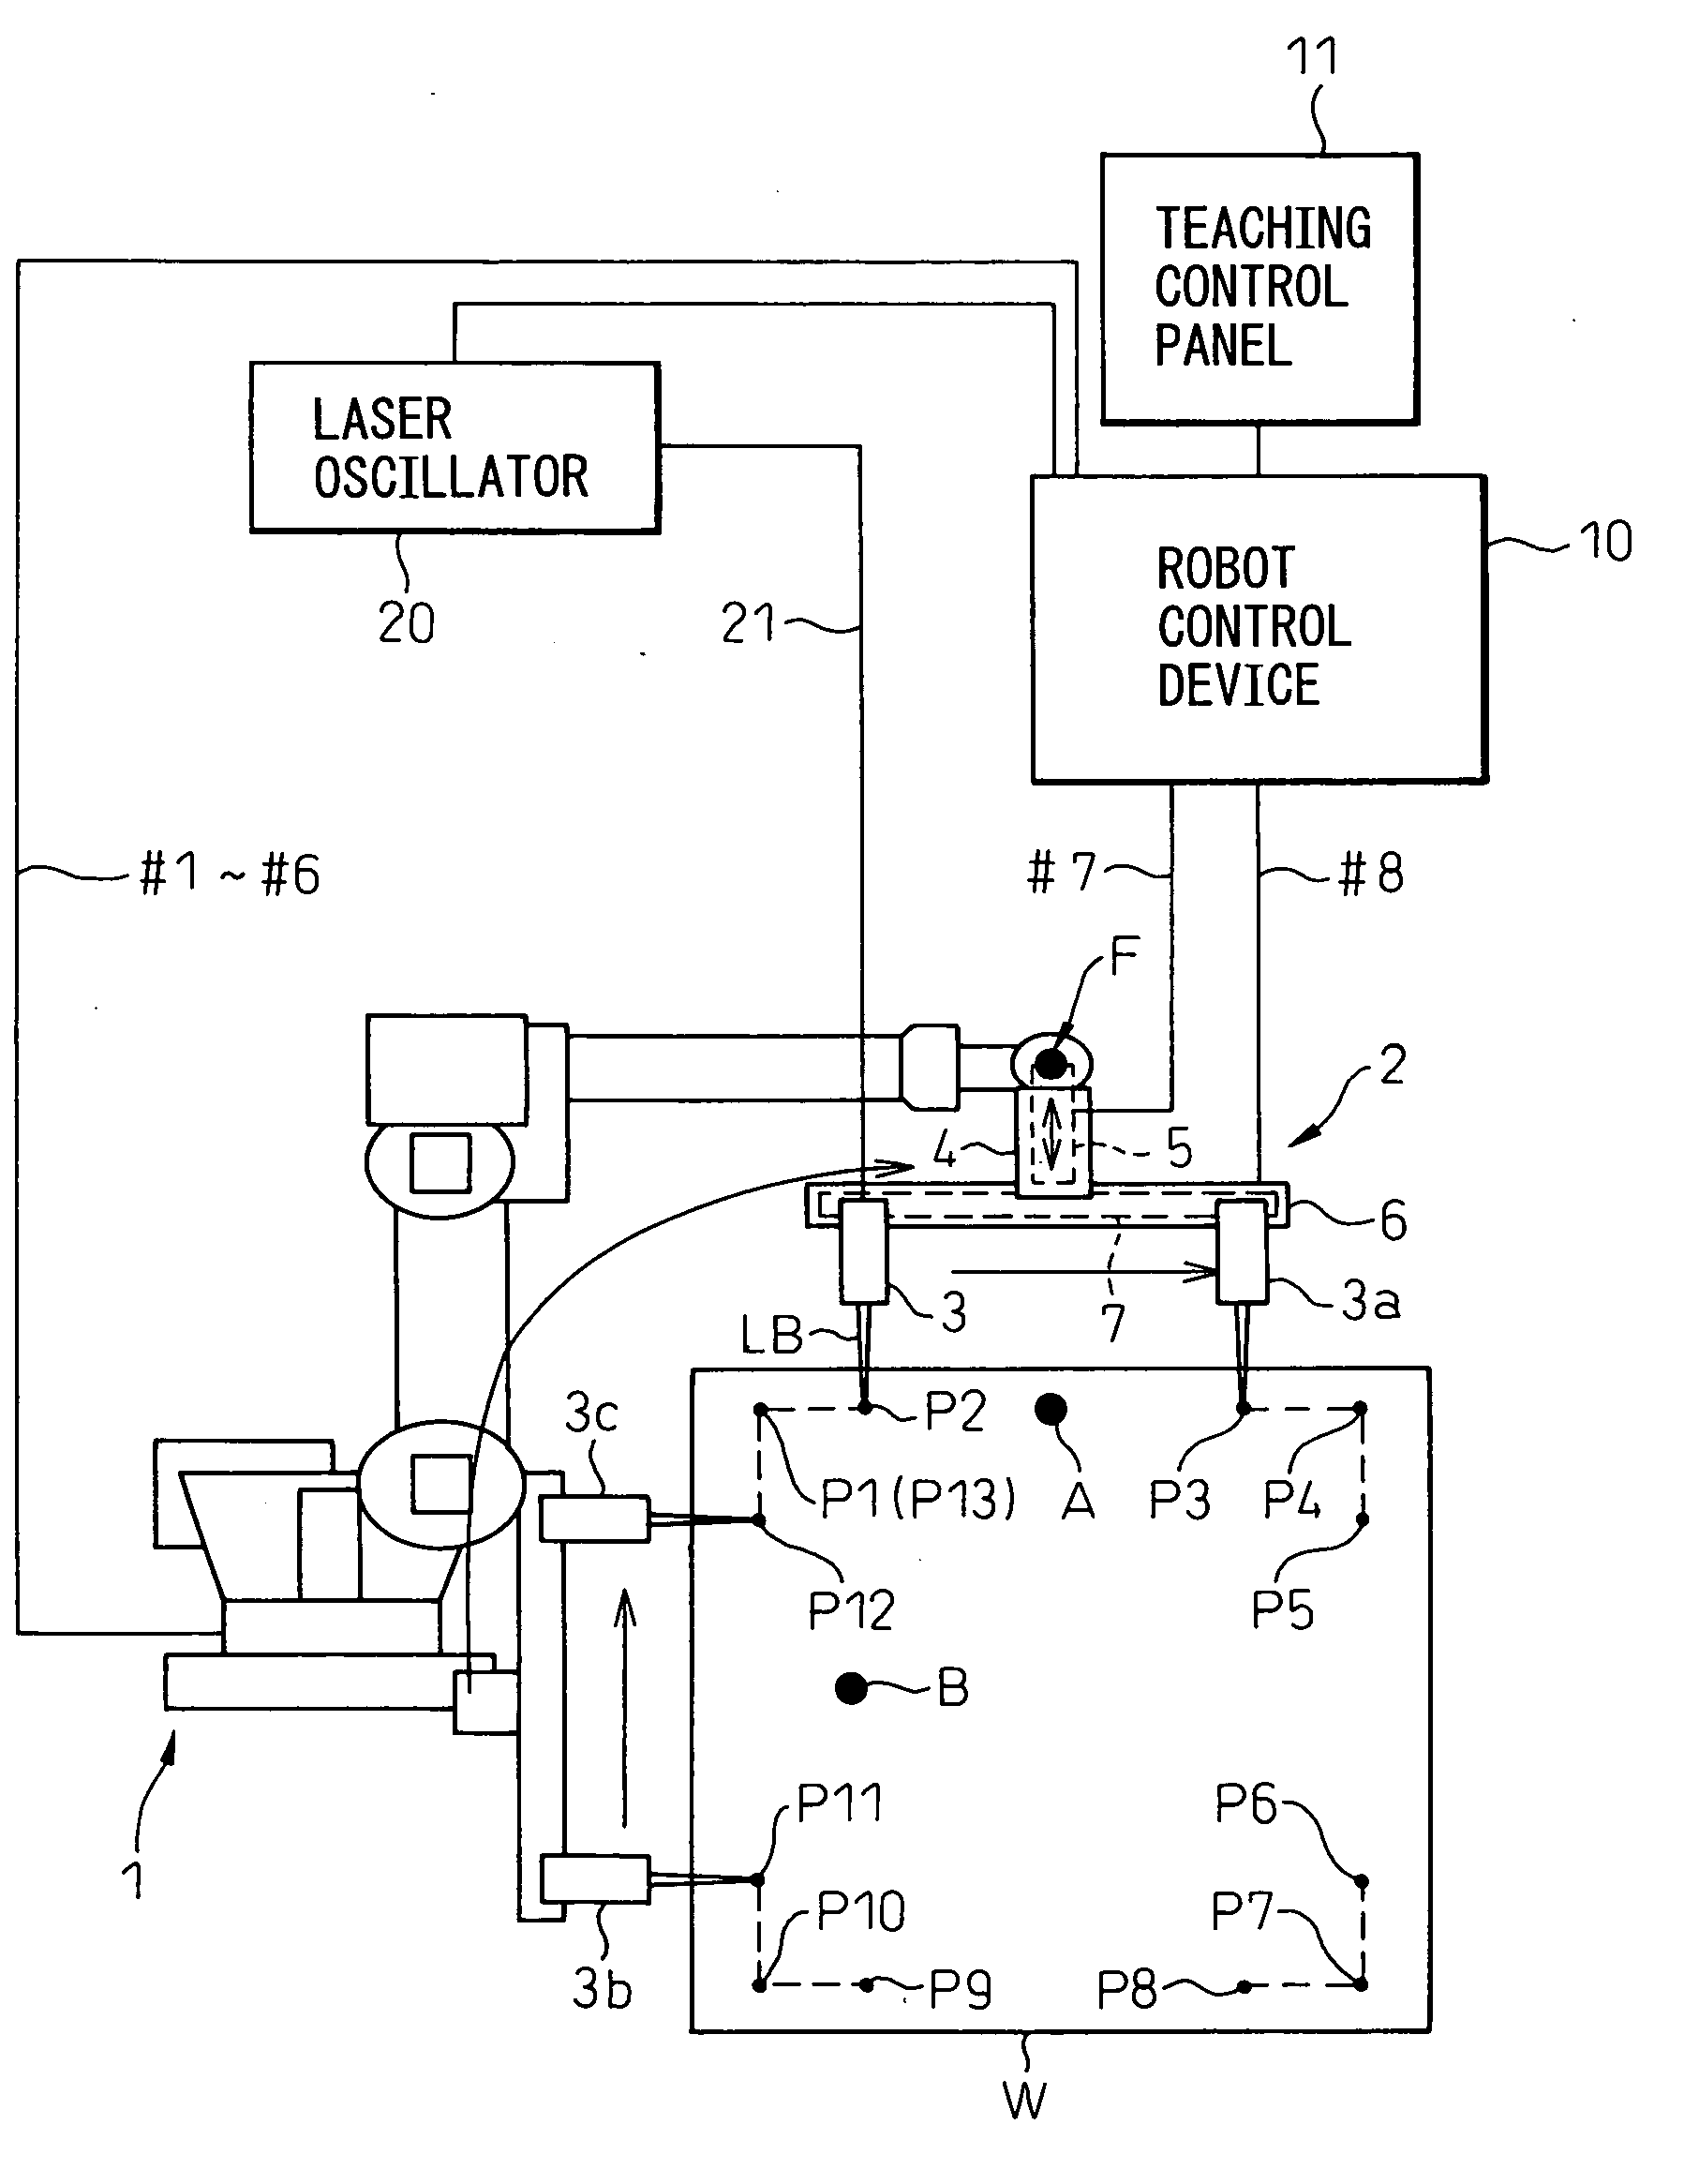 Laser processing apparatus